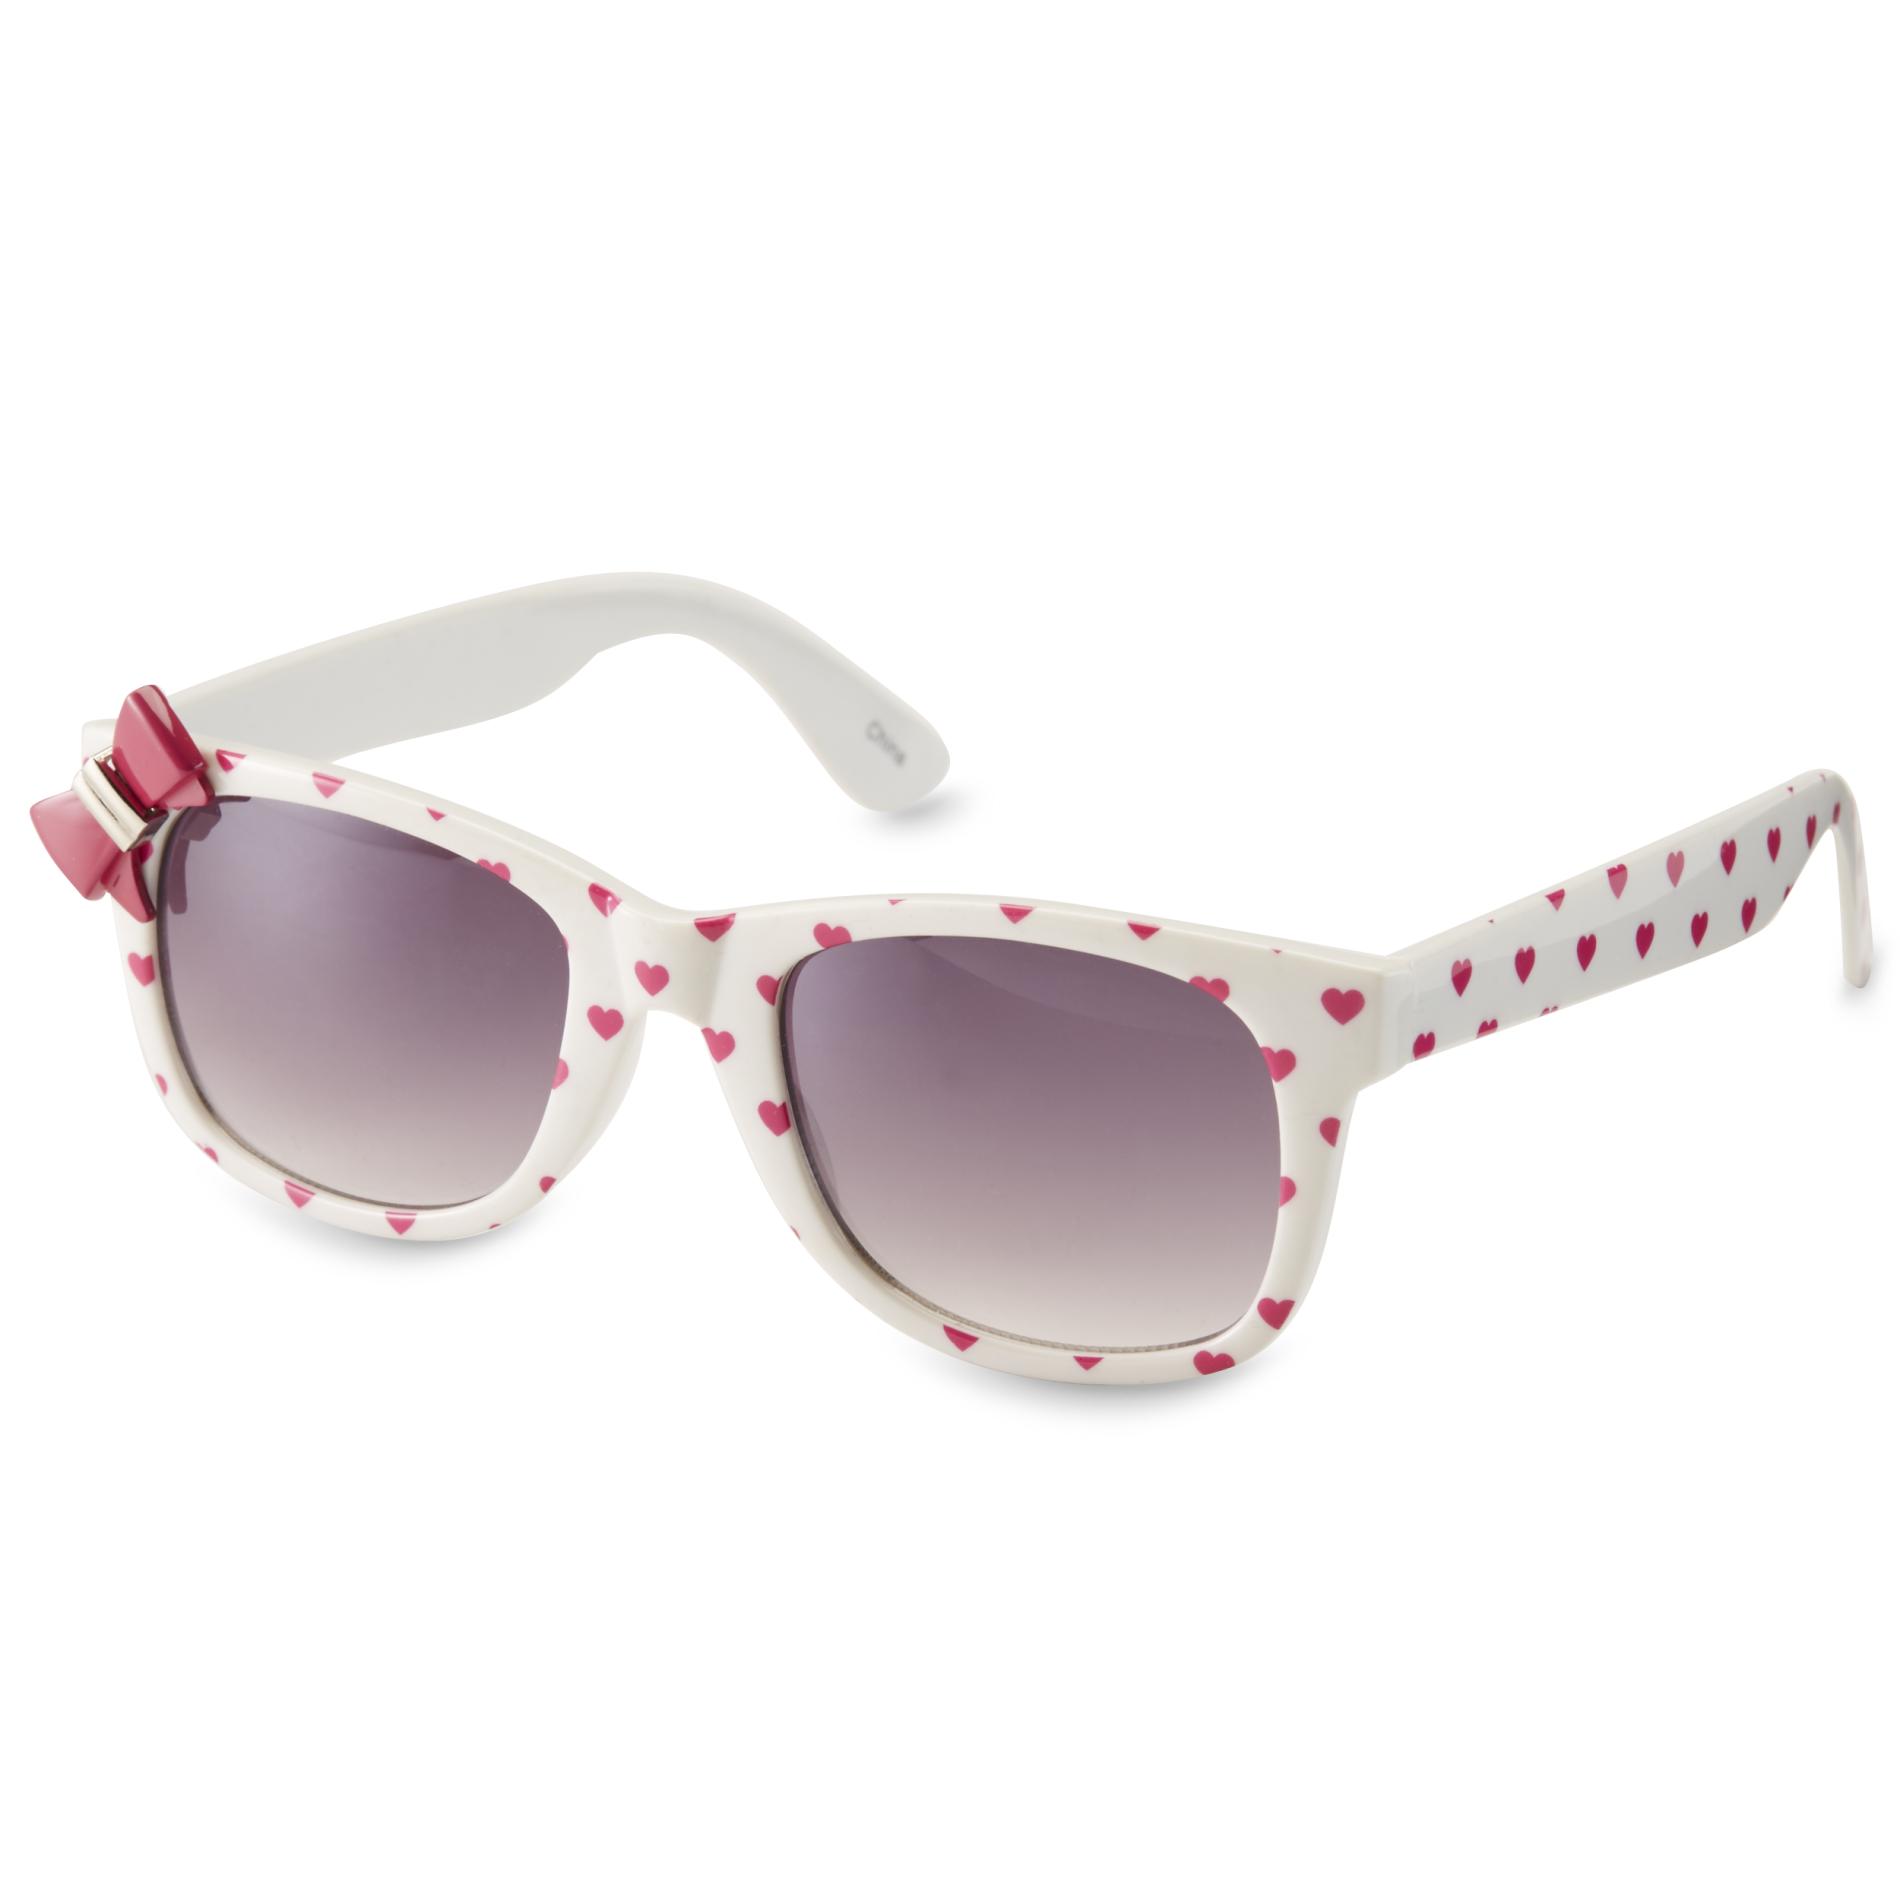 Joe Boxer Women's White & Pink Heart-Print Retro Sunglasses